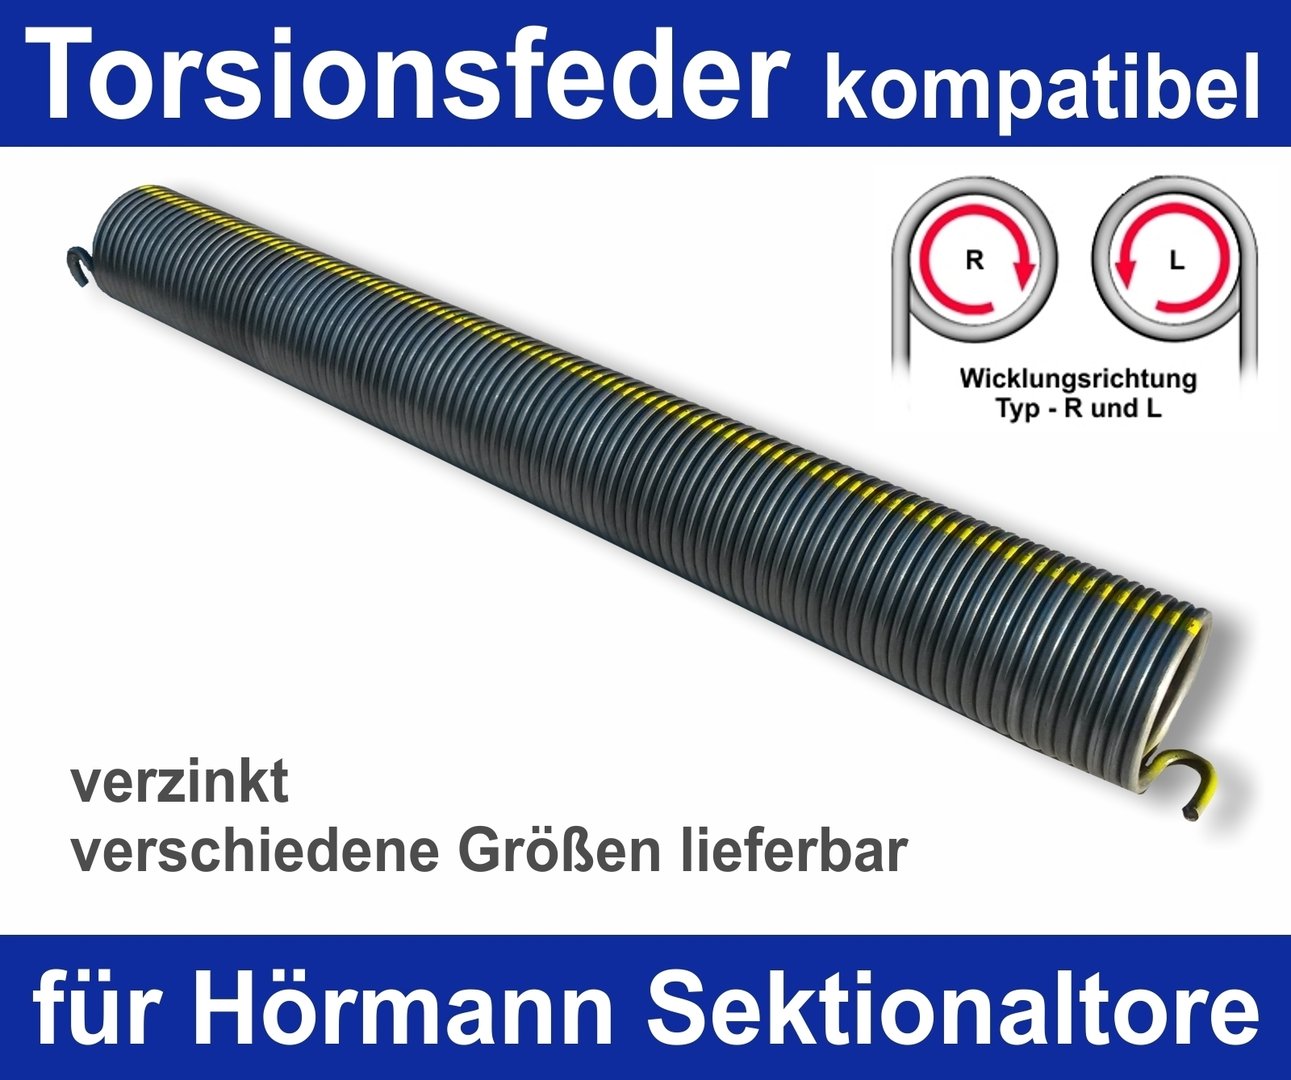 L705 im Set Torsionsfeder kompatibel zu Hörmann u Steinau Garagentorfeder R707 